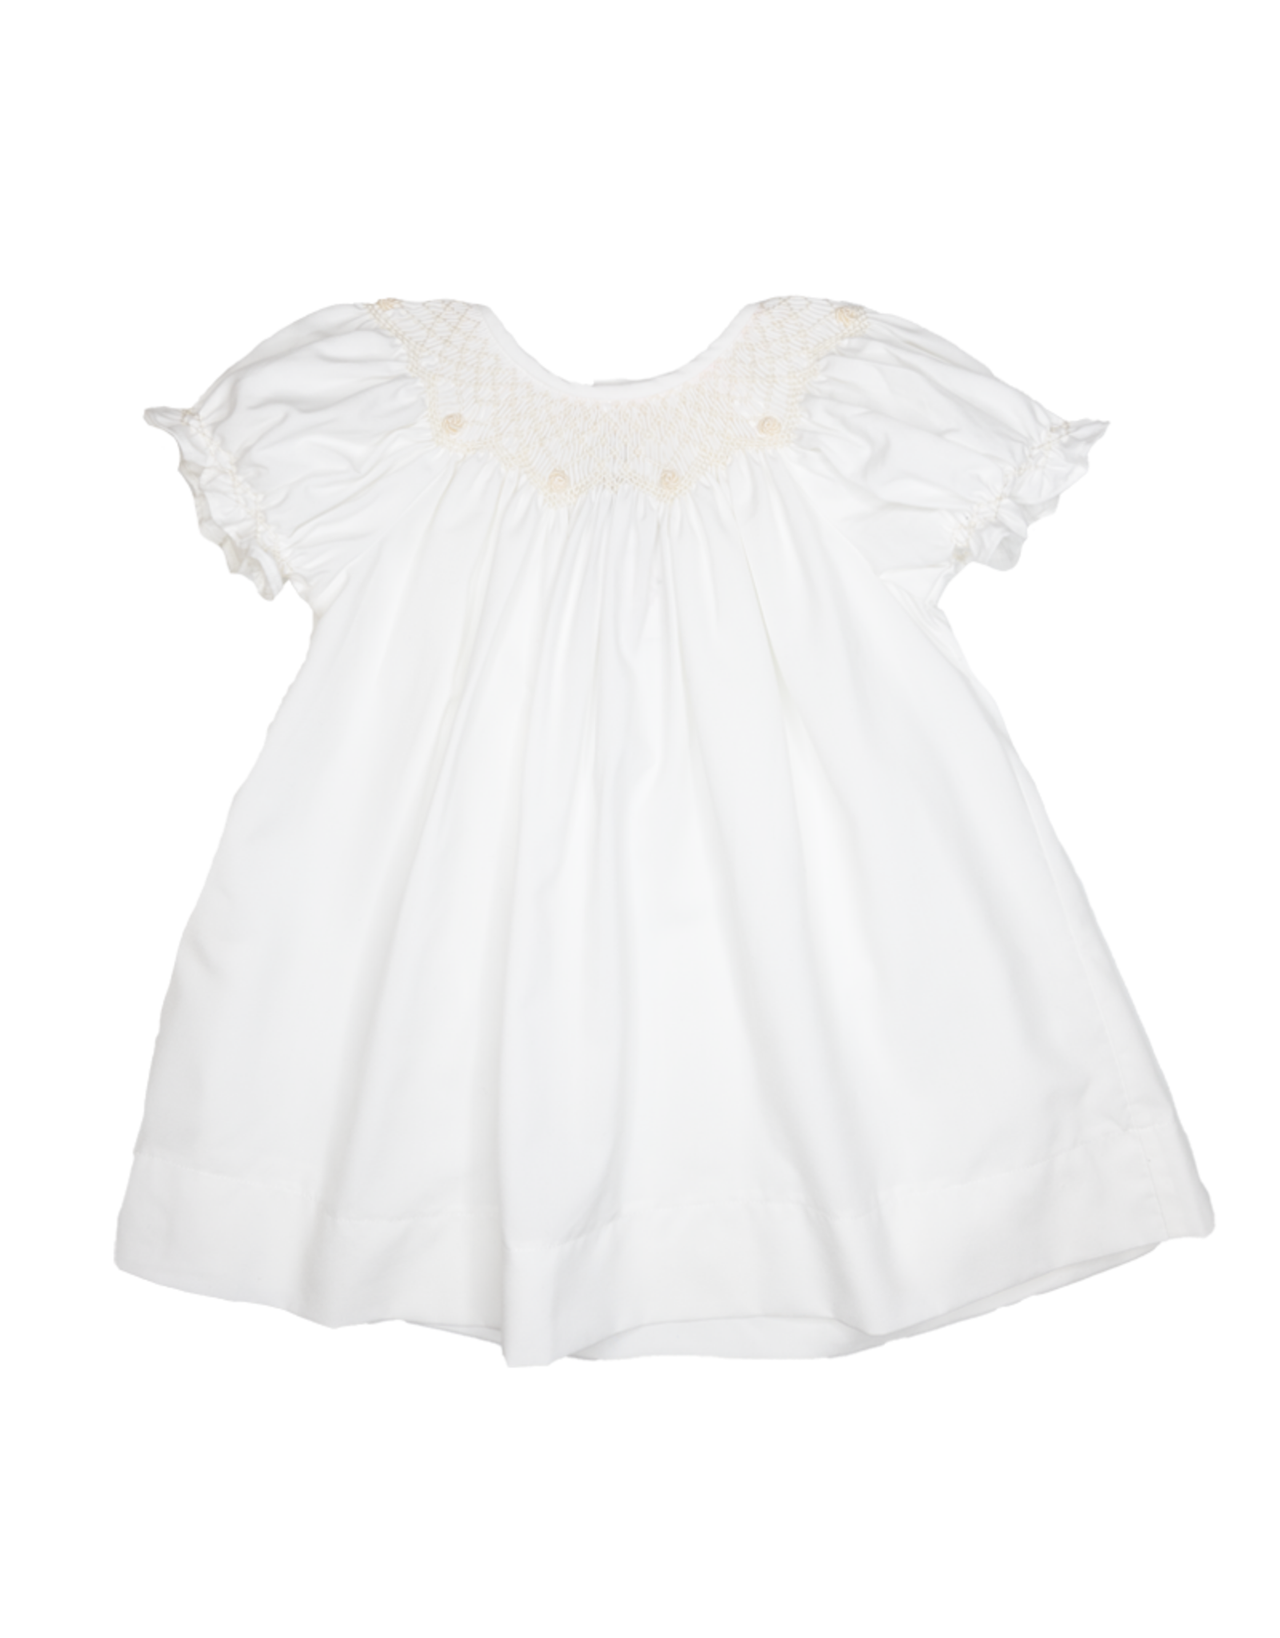 Sweet Dreams Ava White/Beige Smocked Dress NHC149